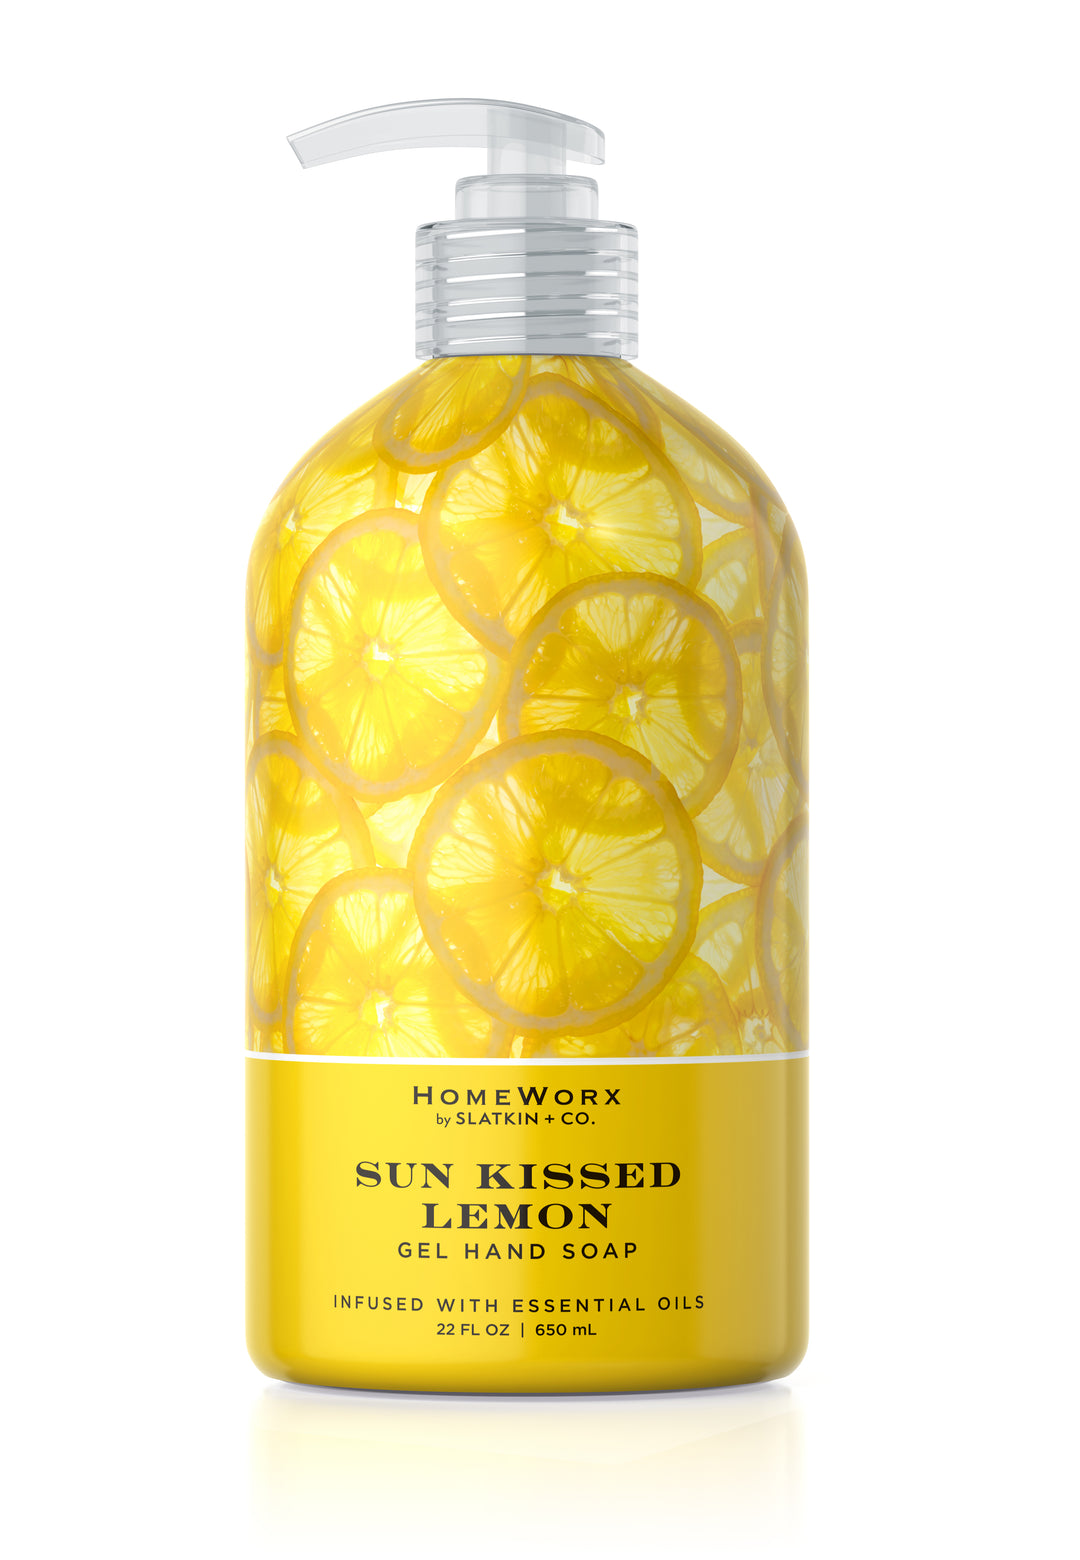 Sun Kissed Lemon Gel Hand Soap